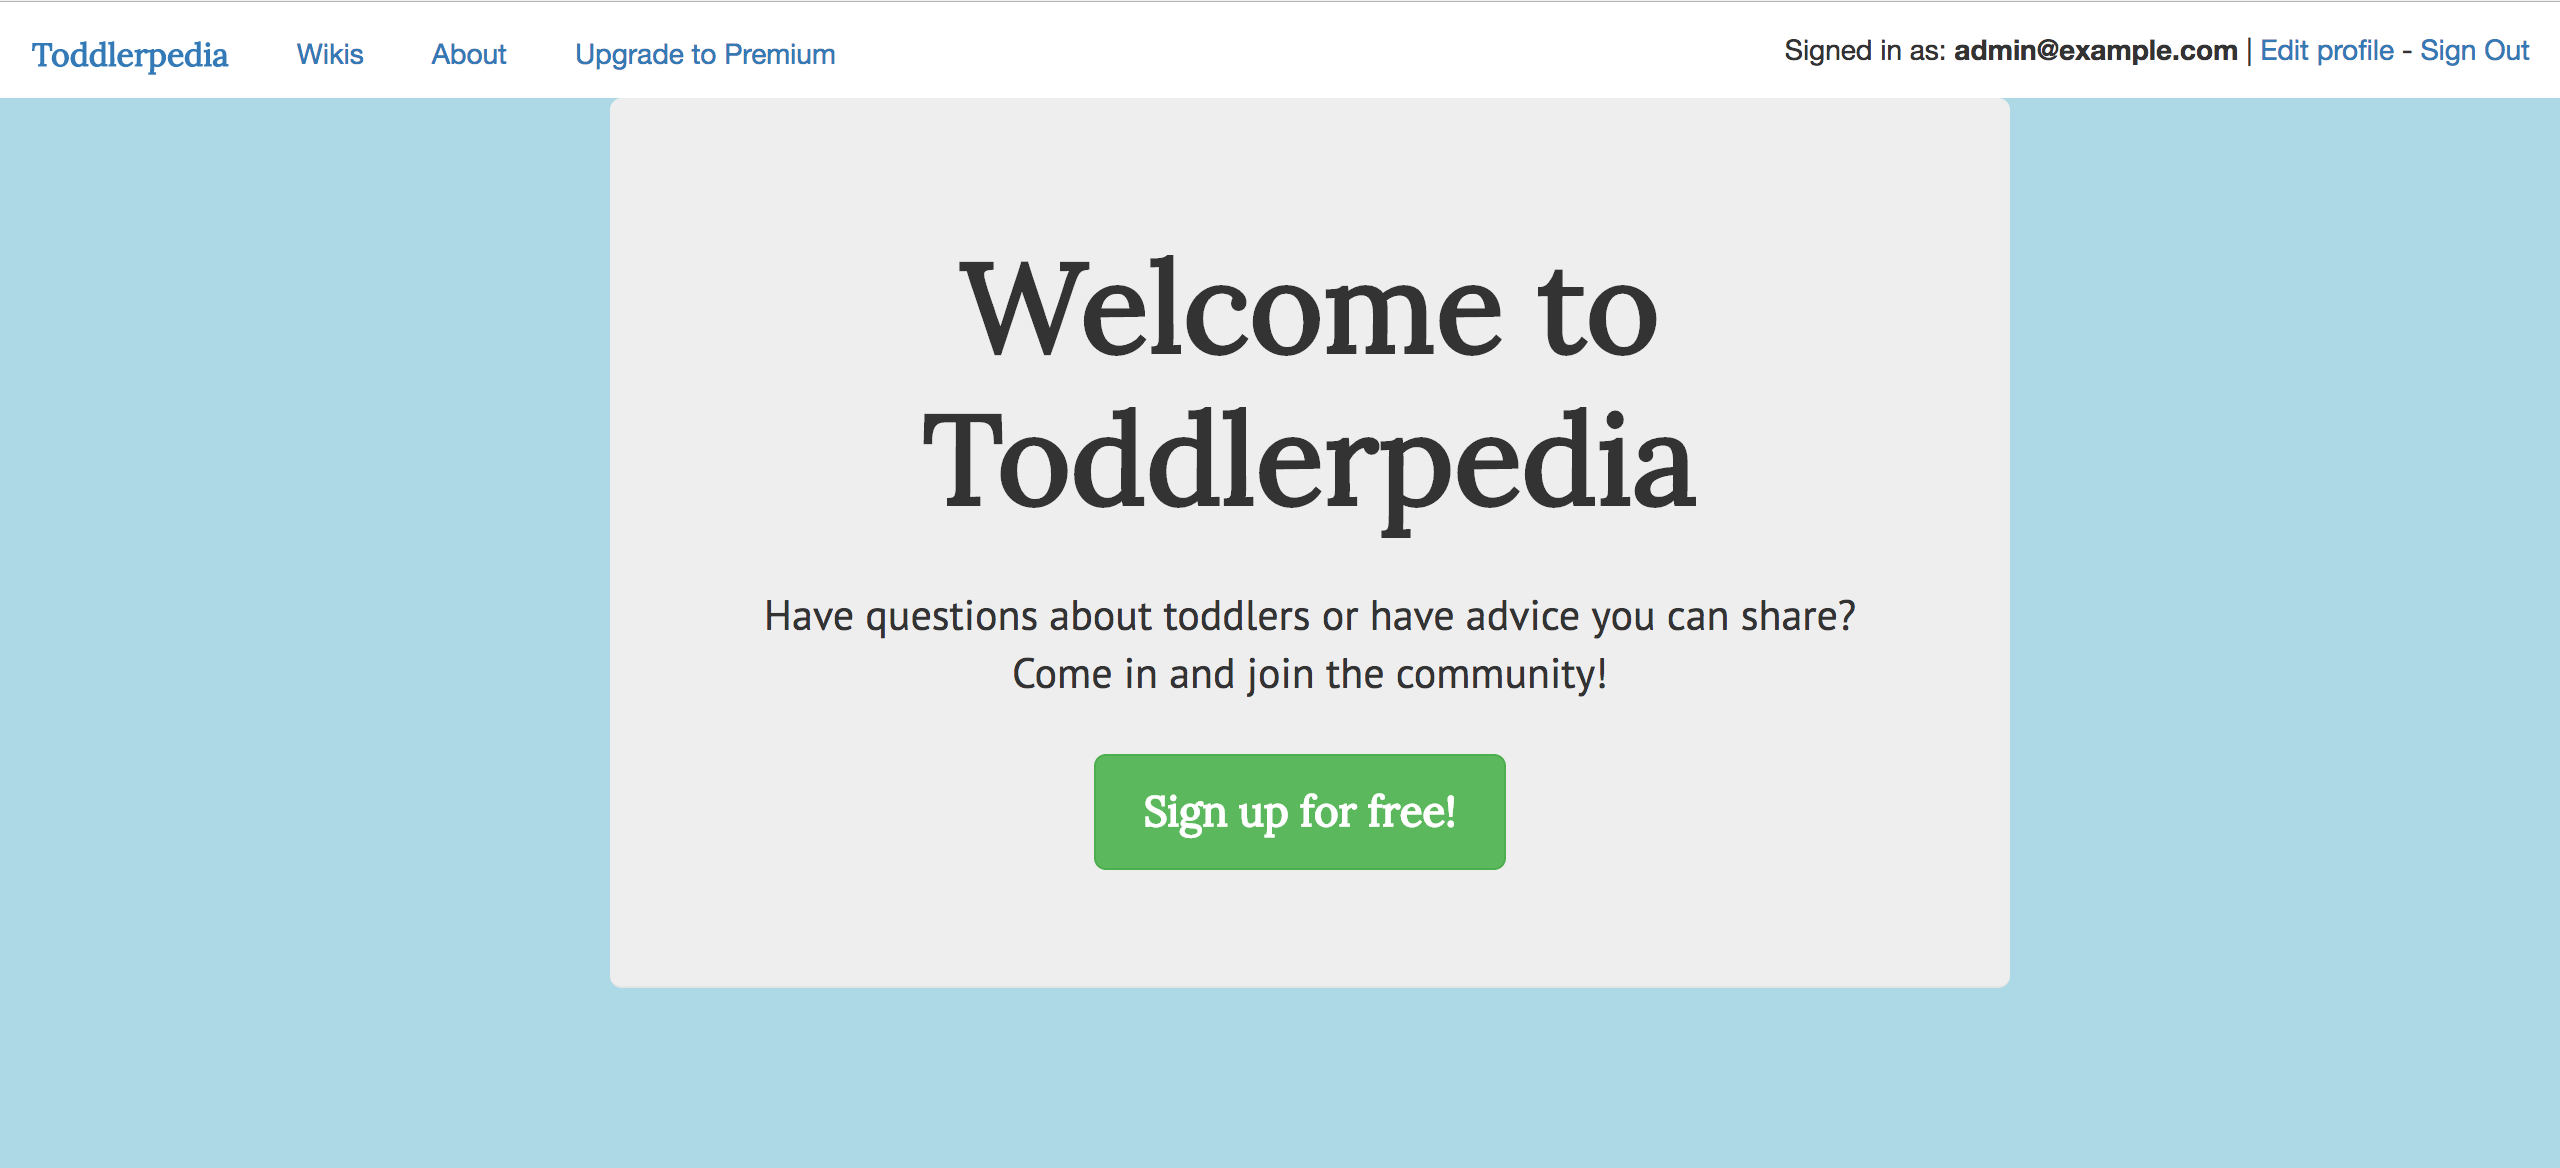 Toddlerpedia